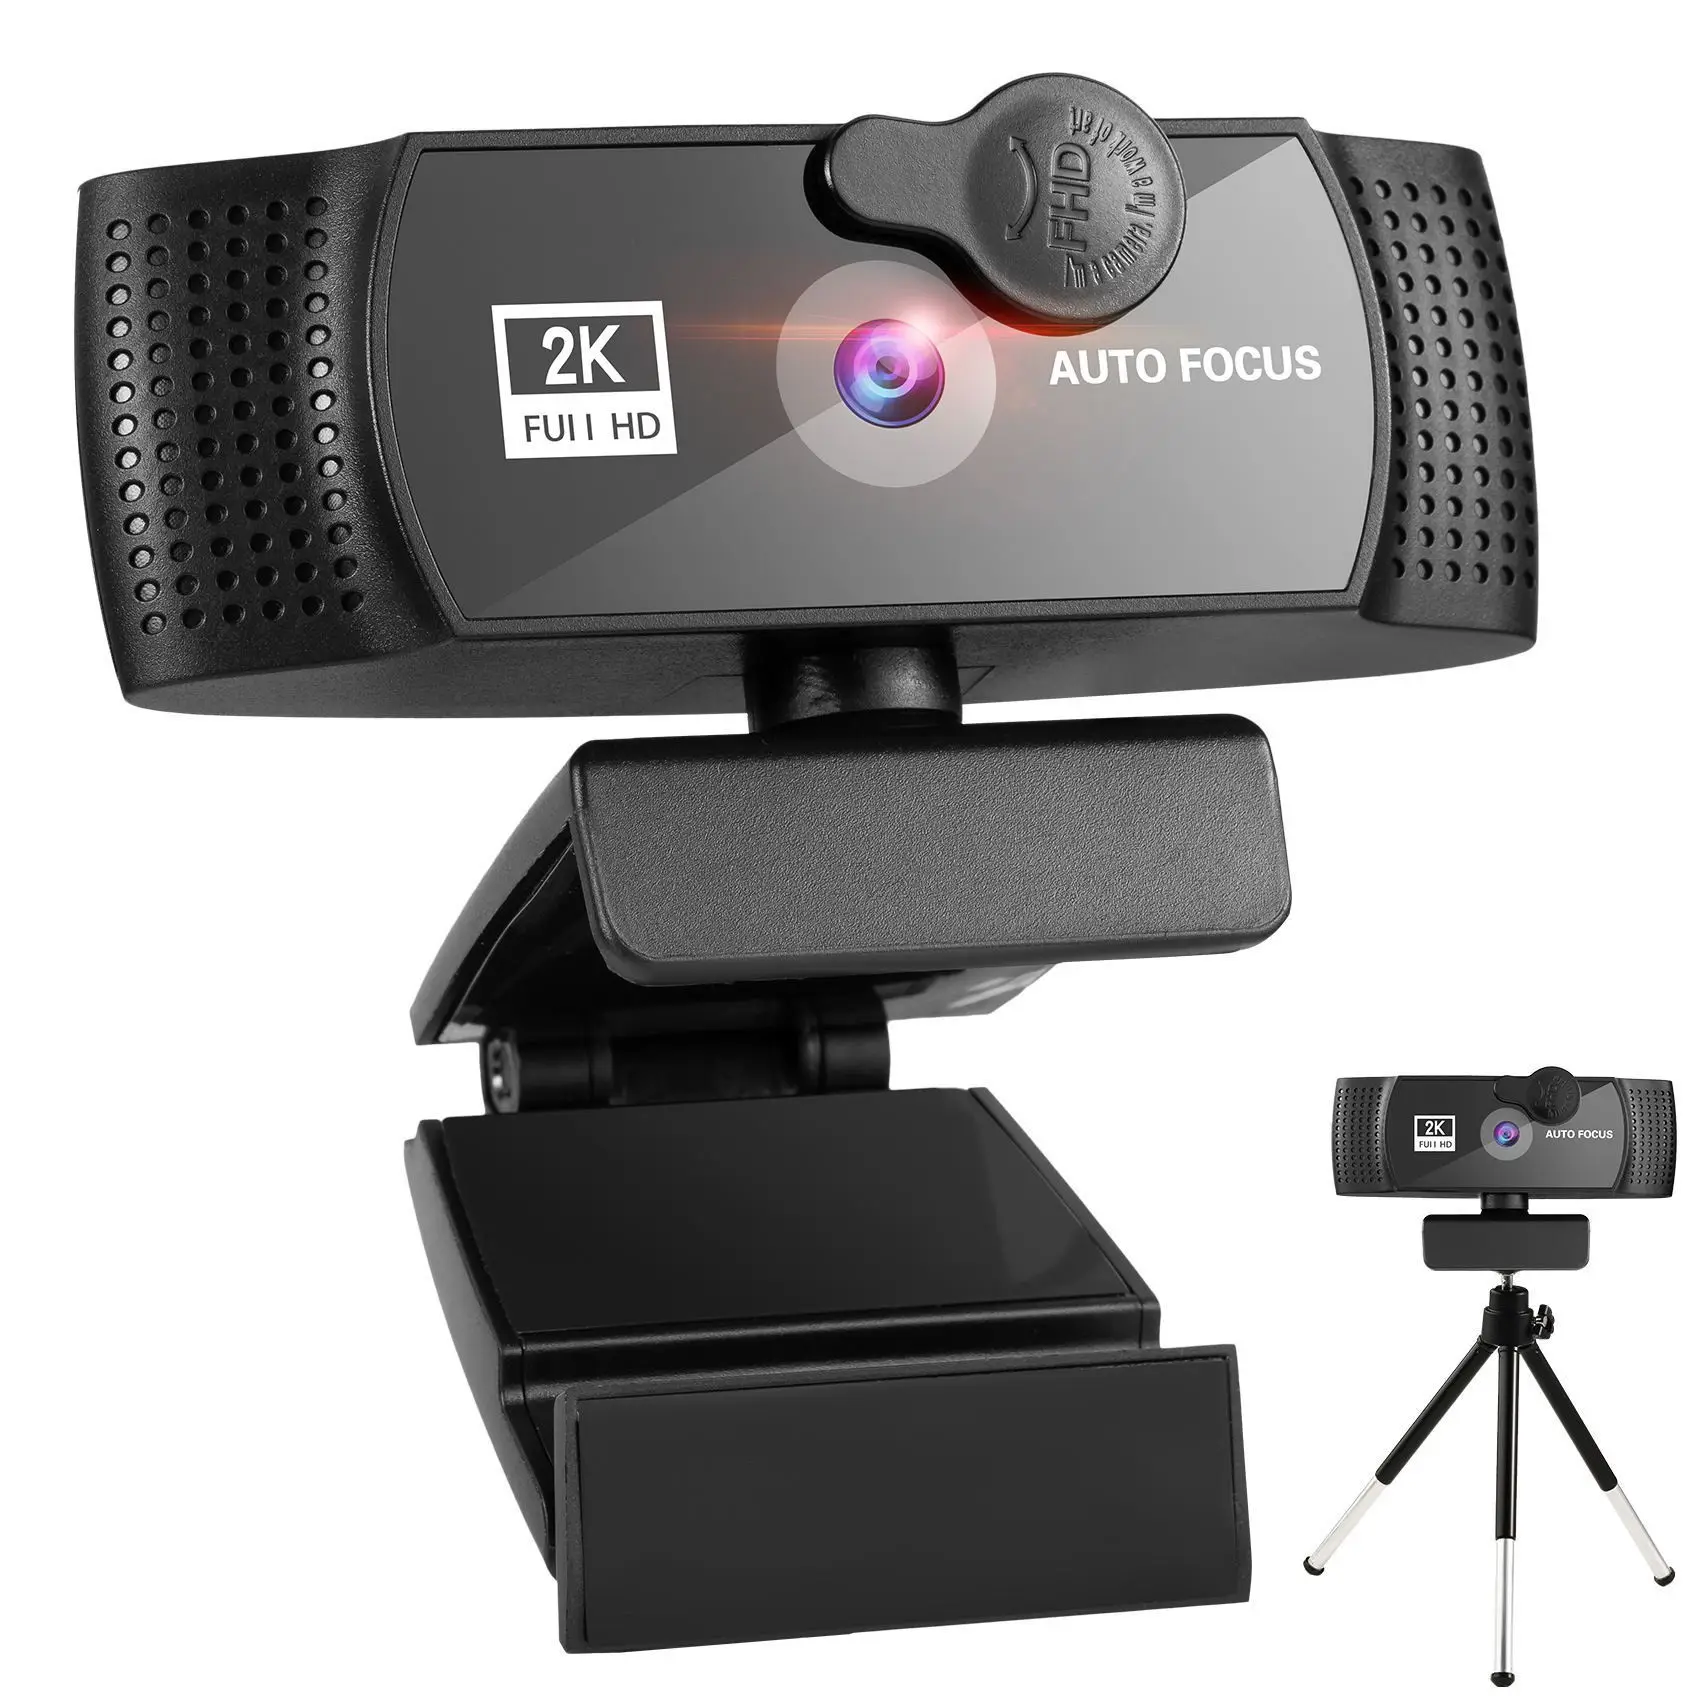 Kamera Mini 4k kamera video LED, kamera web komputer cocok untuk video chat dan telekonferensing kamera web online